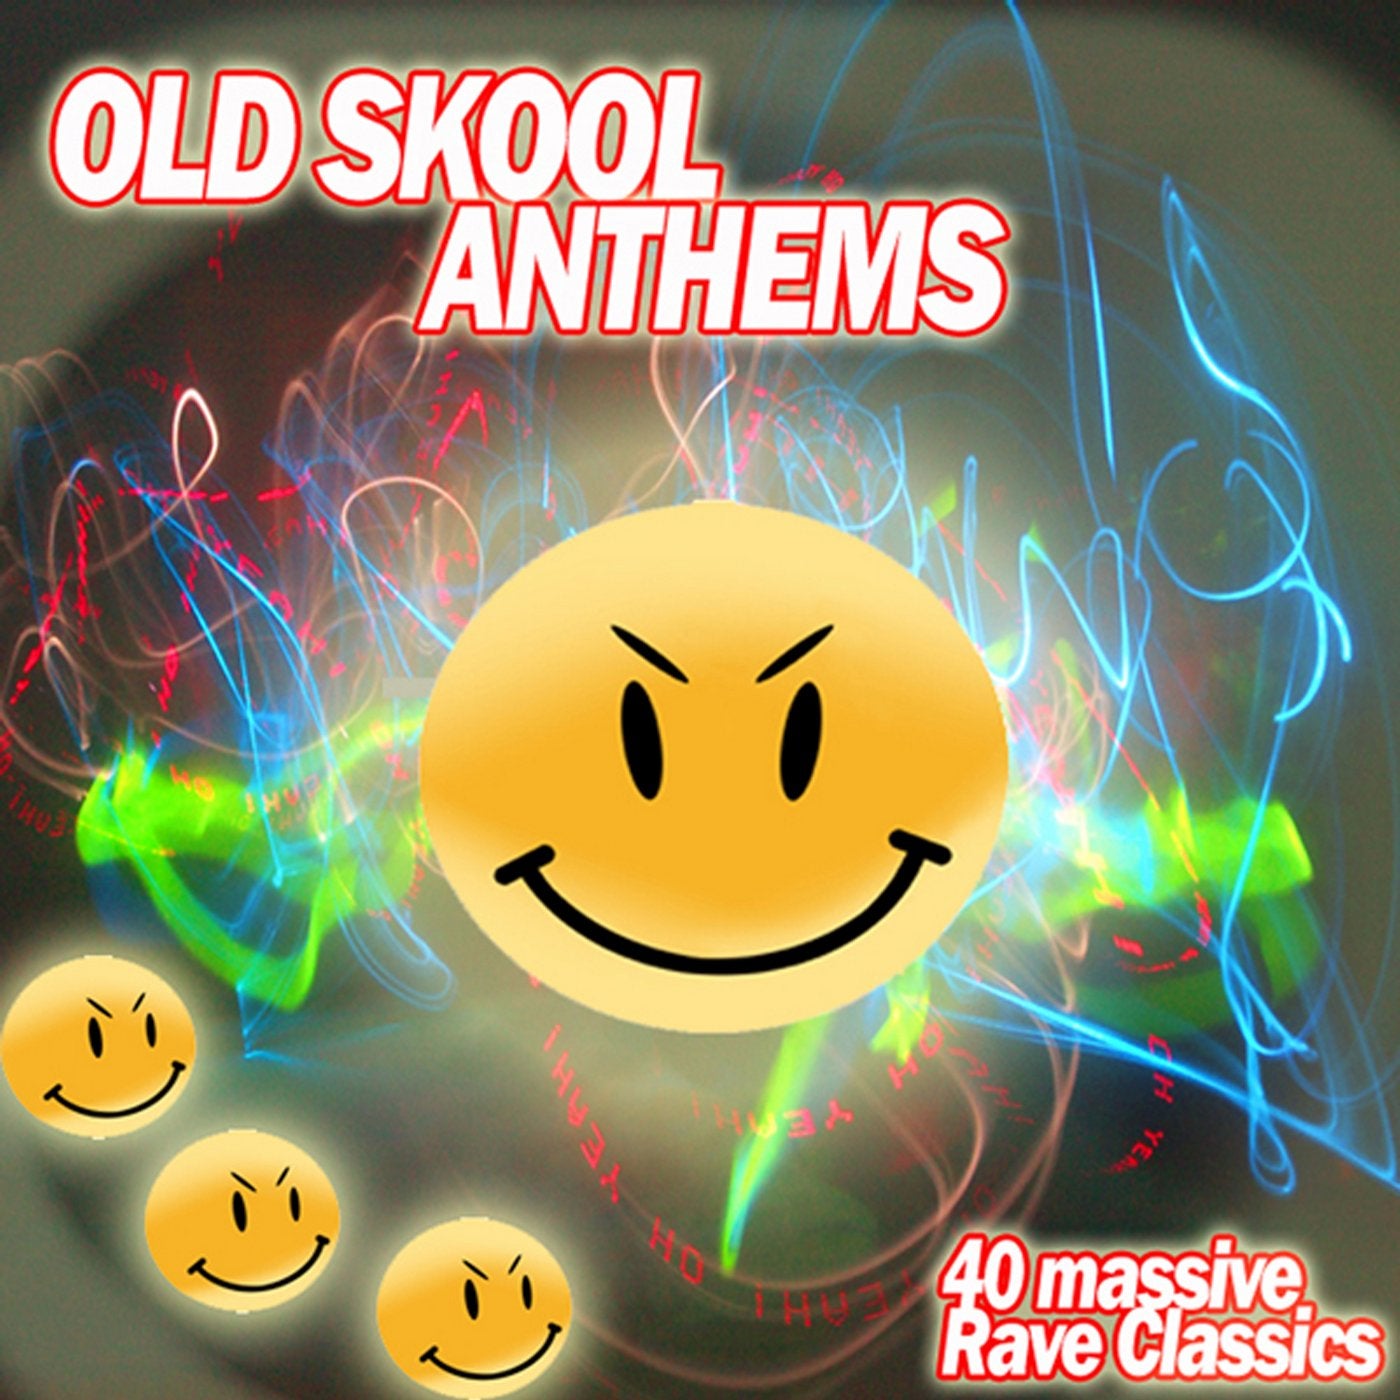 OldSkool Anthems - Rave Classics